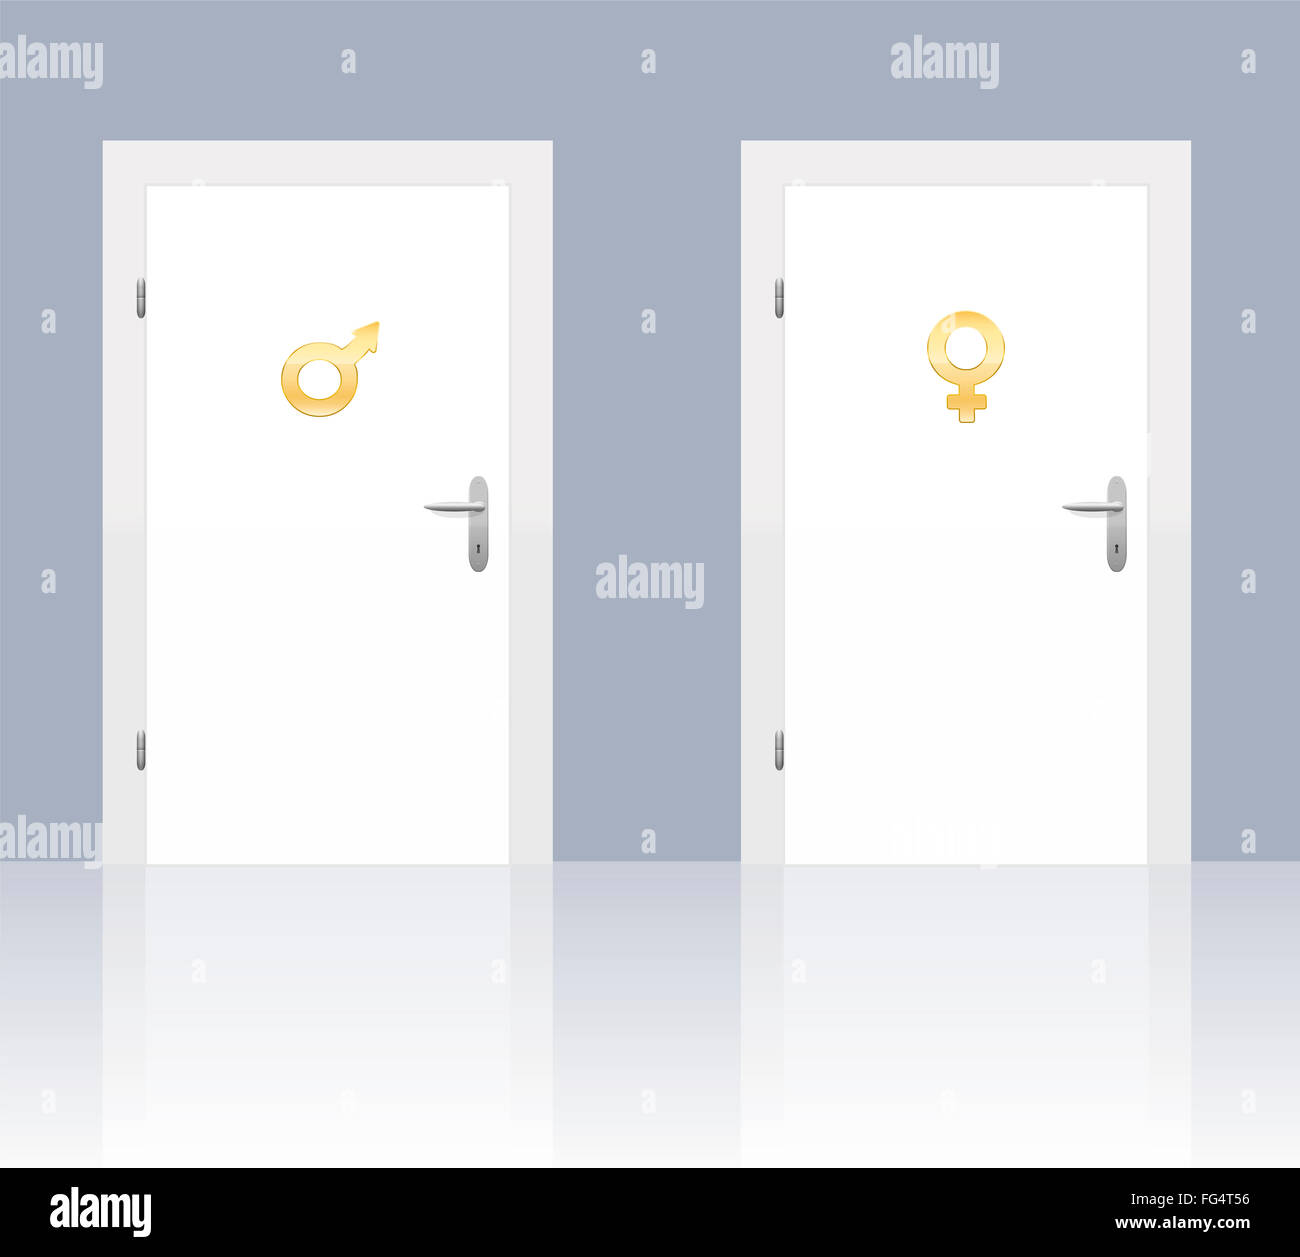 Male and female symbols on two doors - illustration. Stock Photo